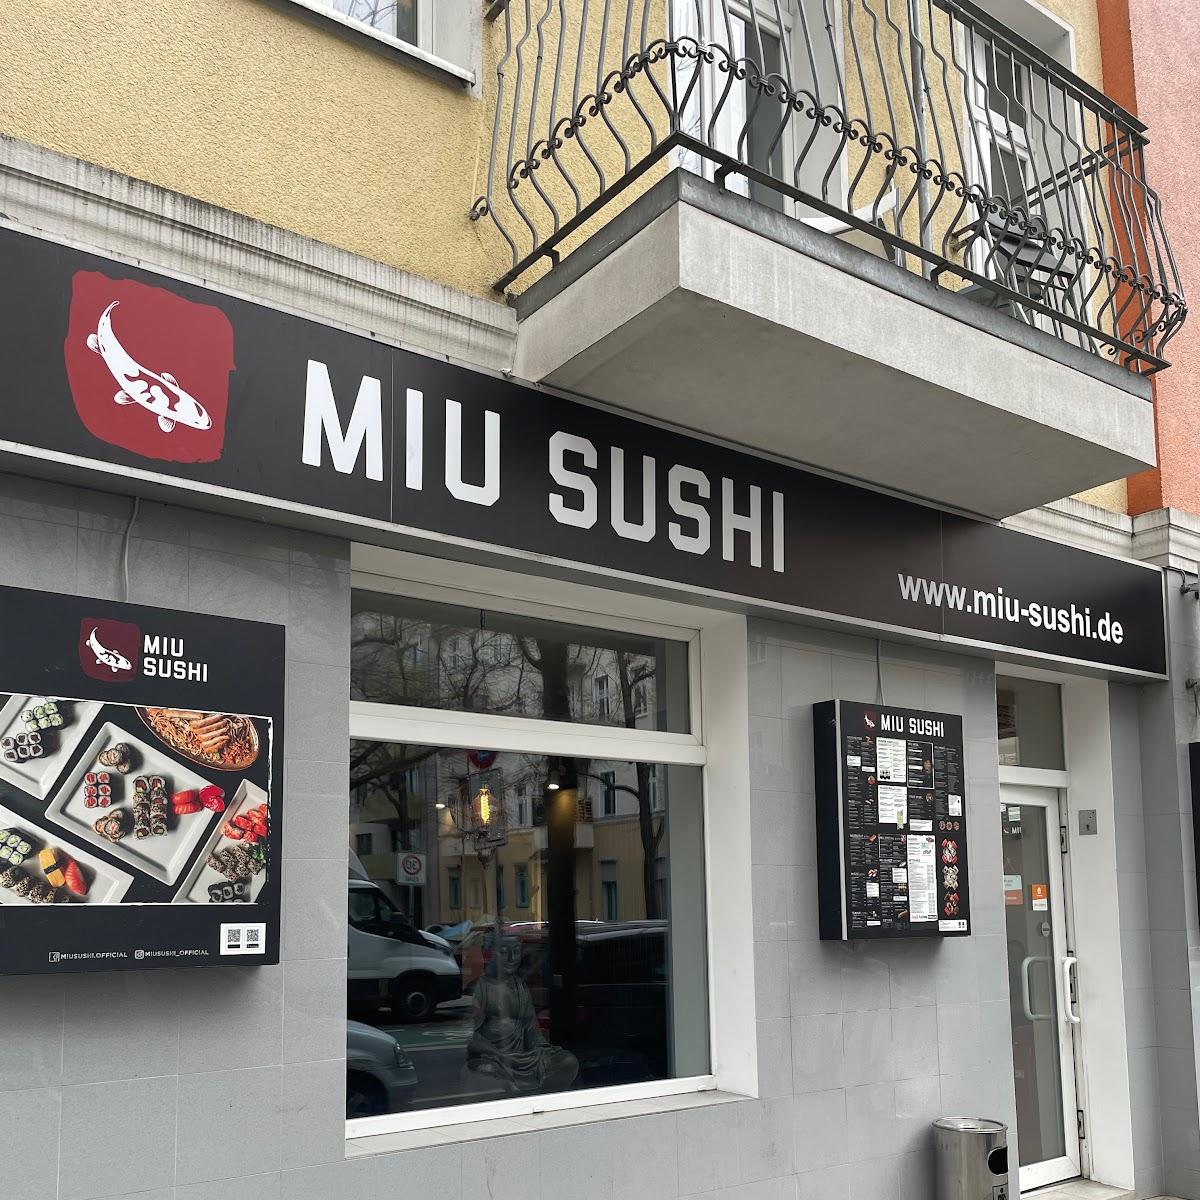 Restaurant "MIU SUSHI SCHÖNEWEIDE" in Berlin